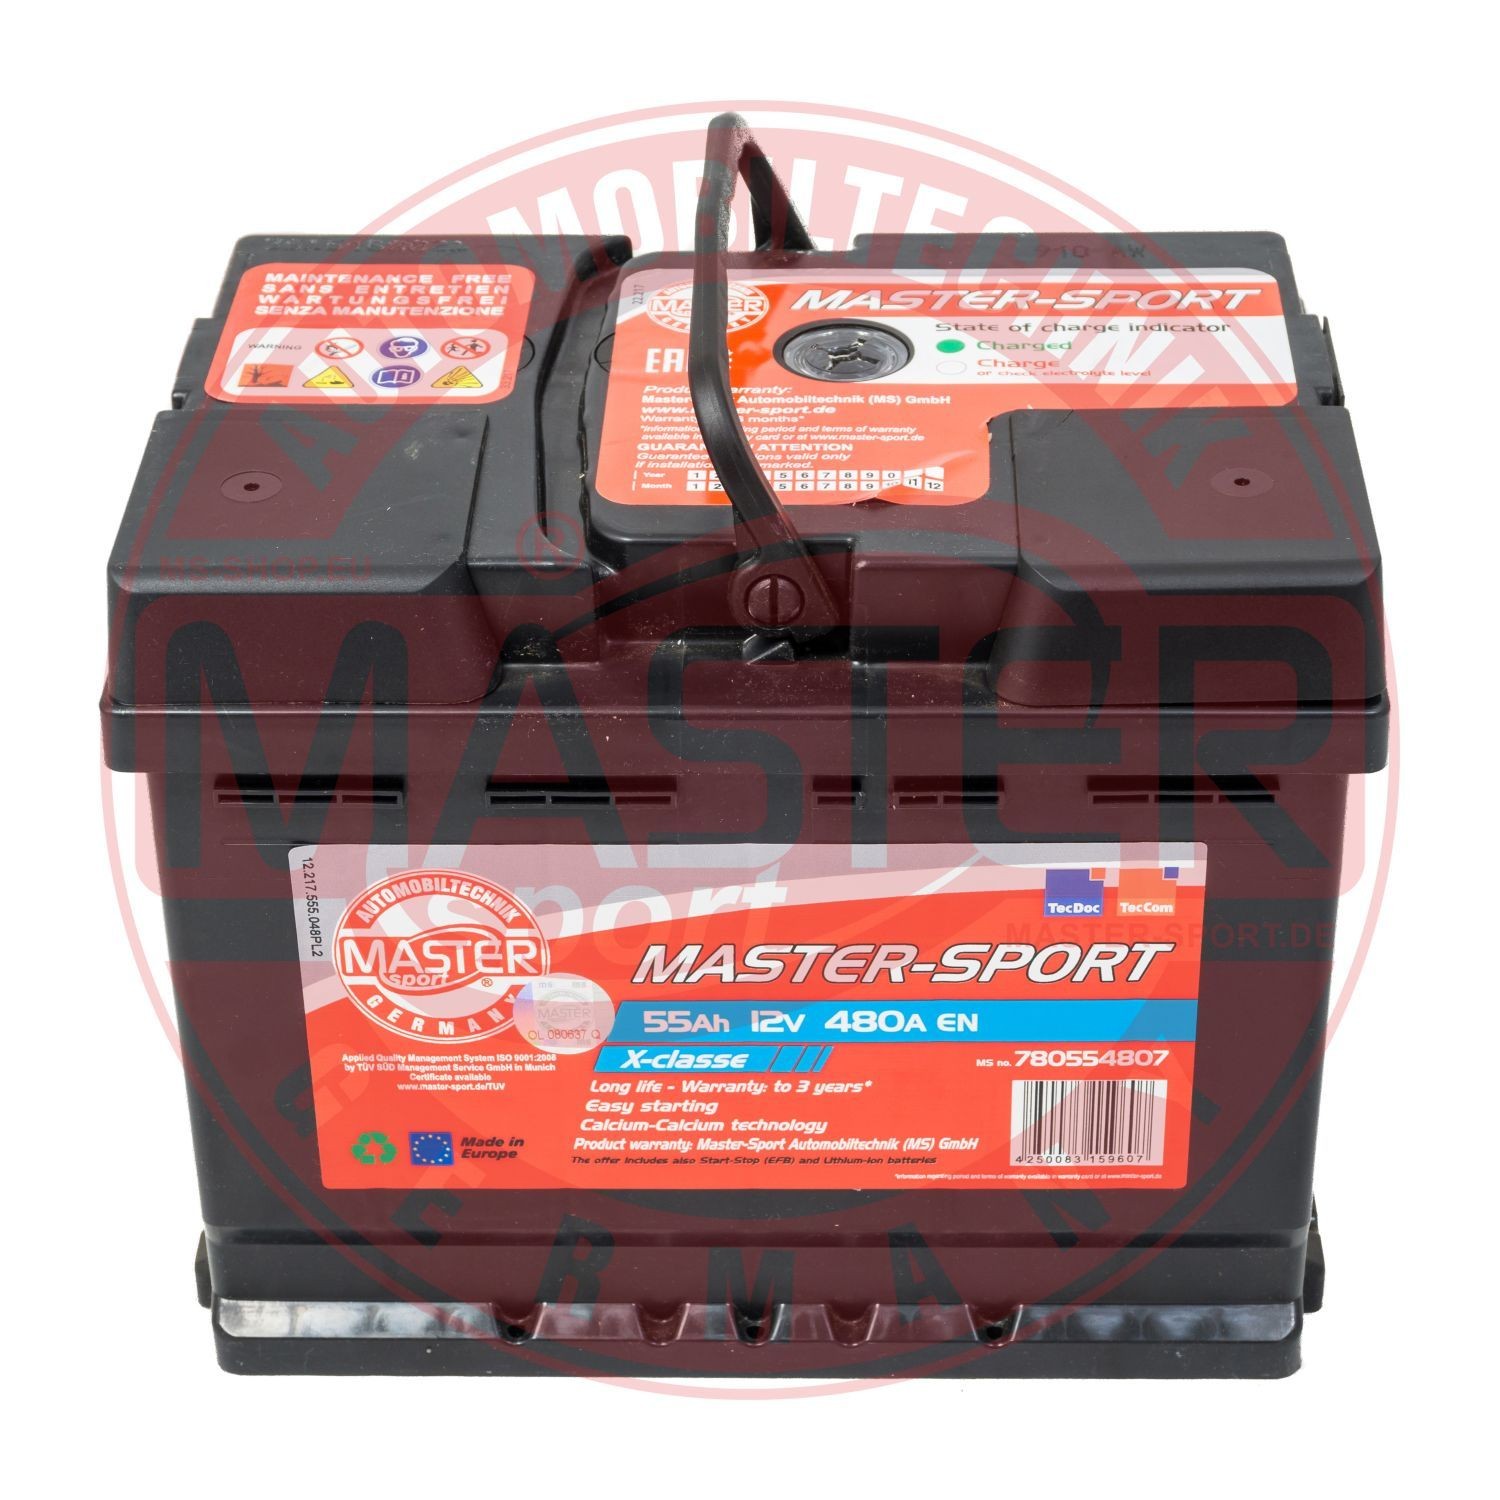 Original 750554802 MASTER-SPORT Battery DODGE